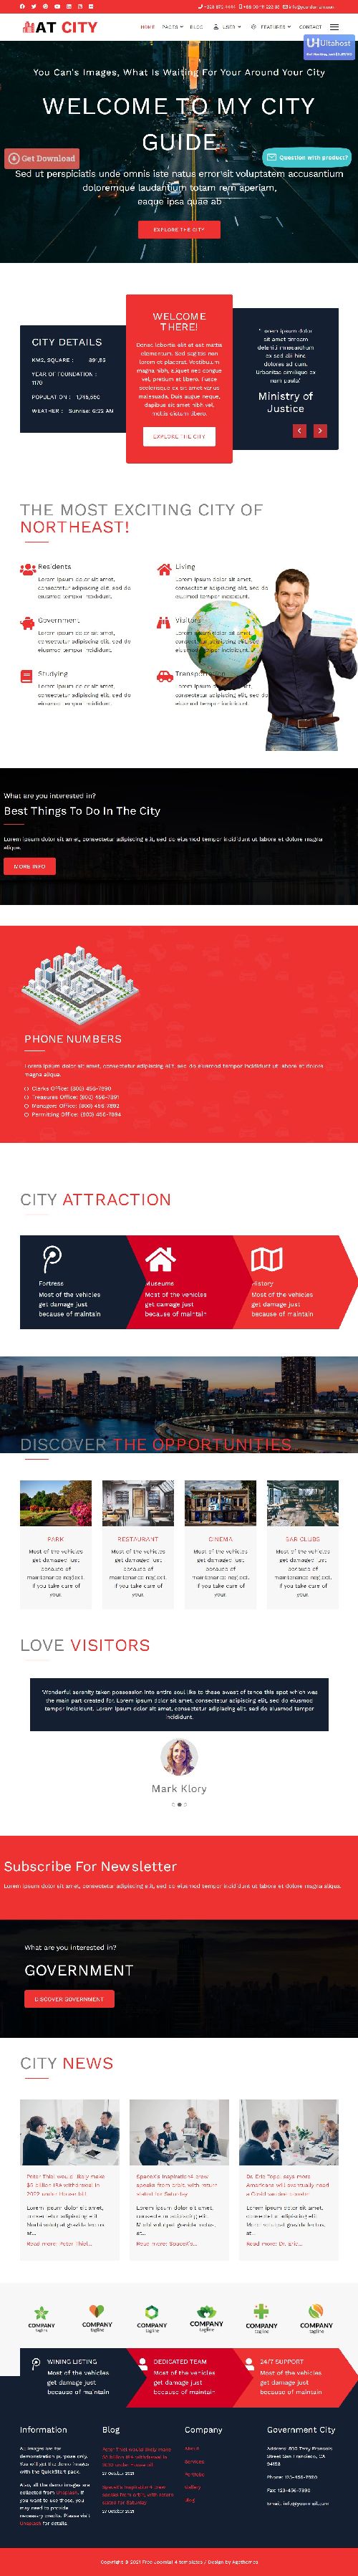 City - Responsive Premium Travel Guide Joomla Template